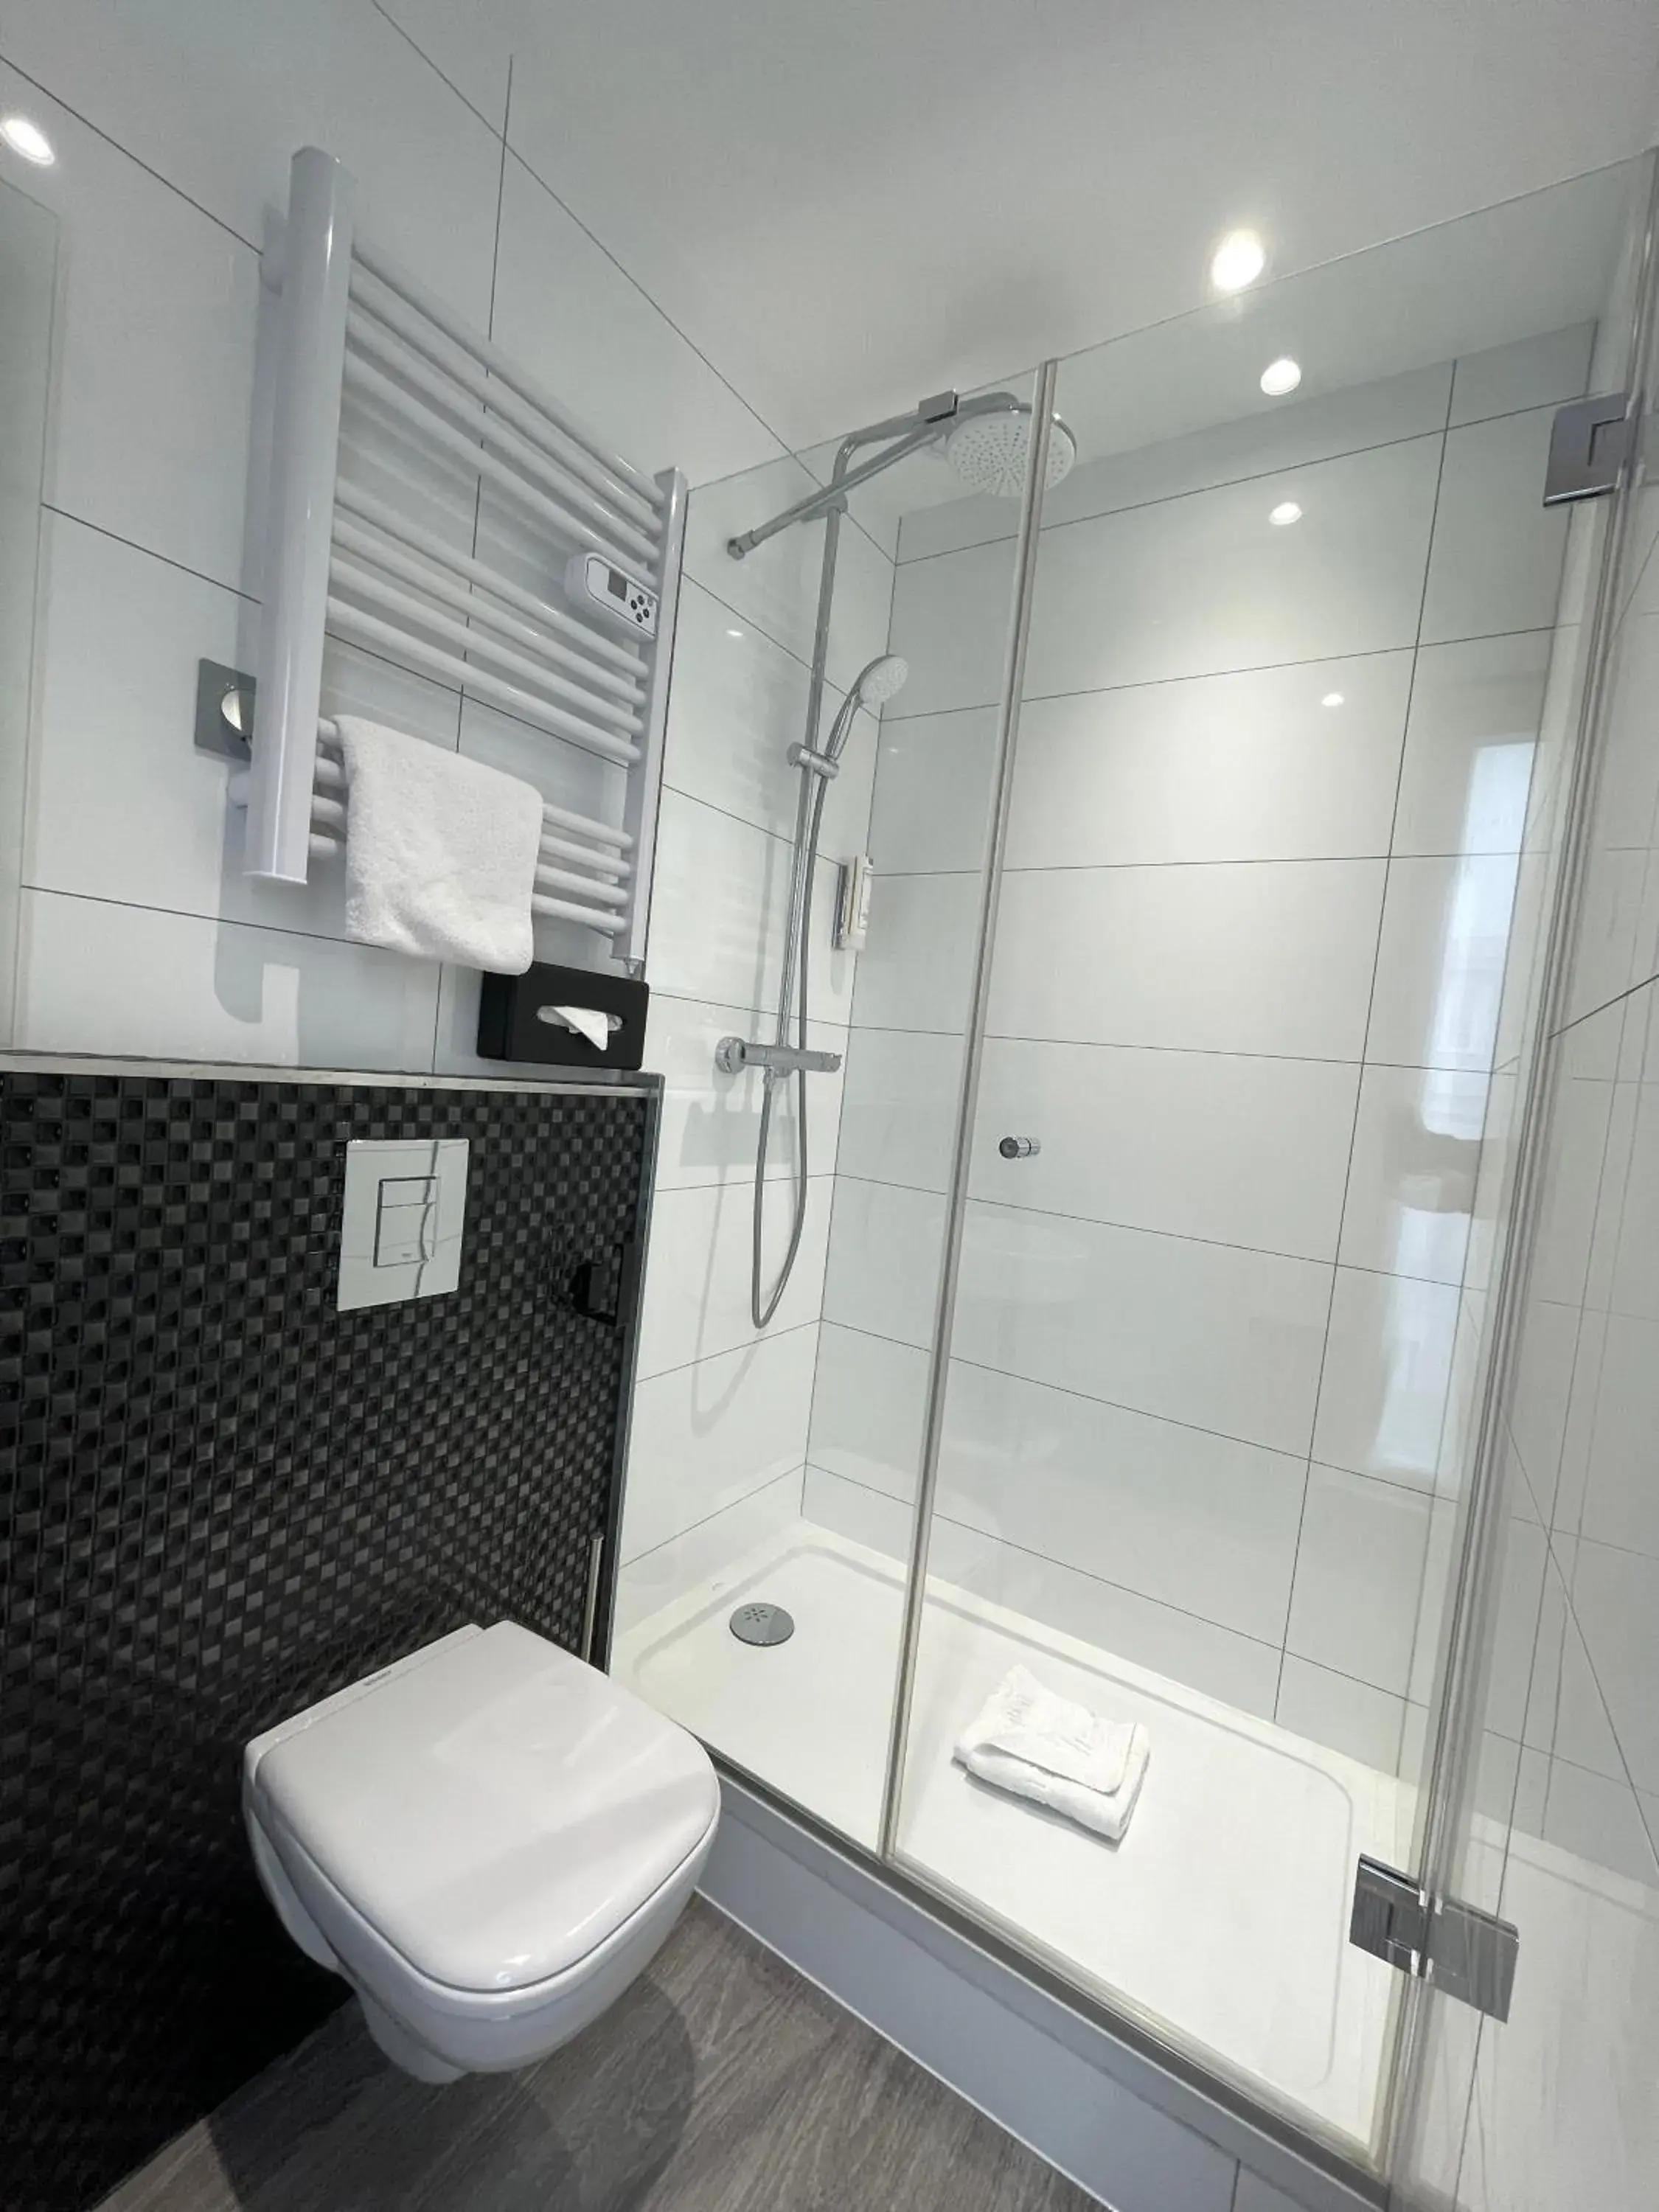 Bathroom in Hotel de Saint-Germain